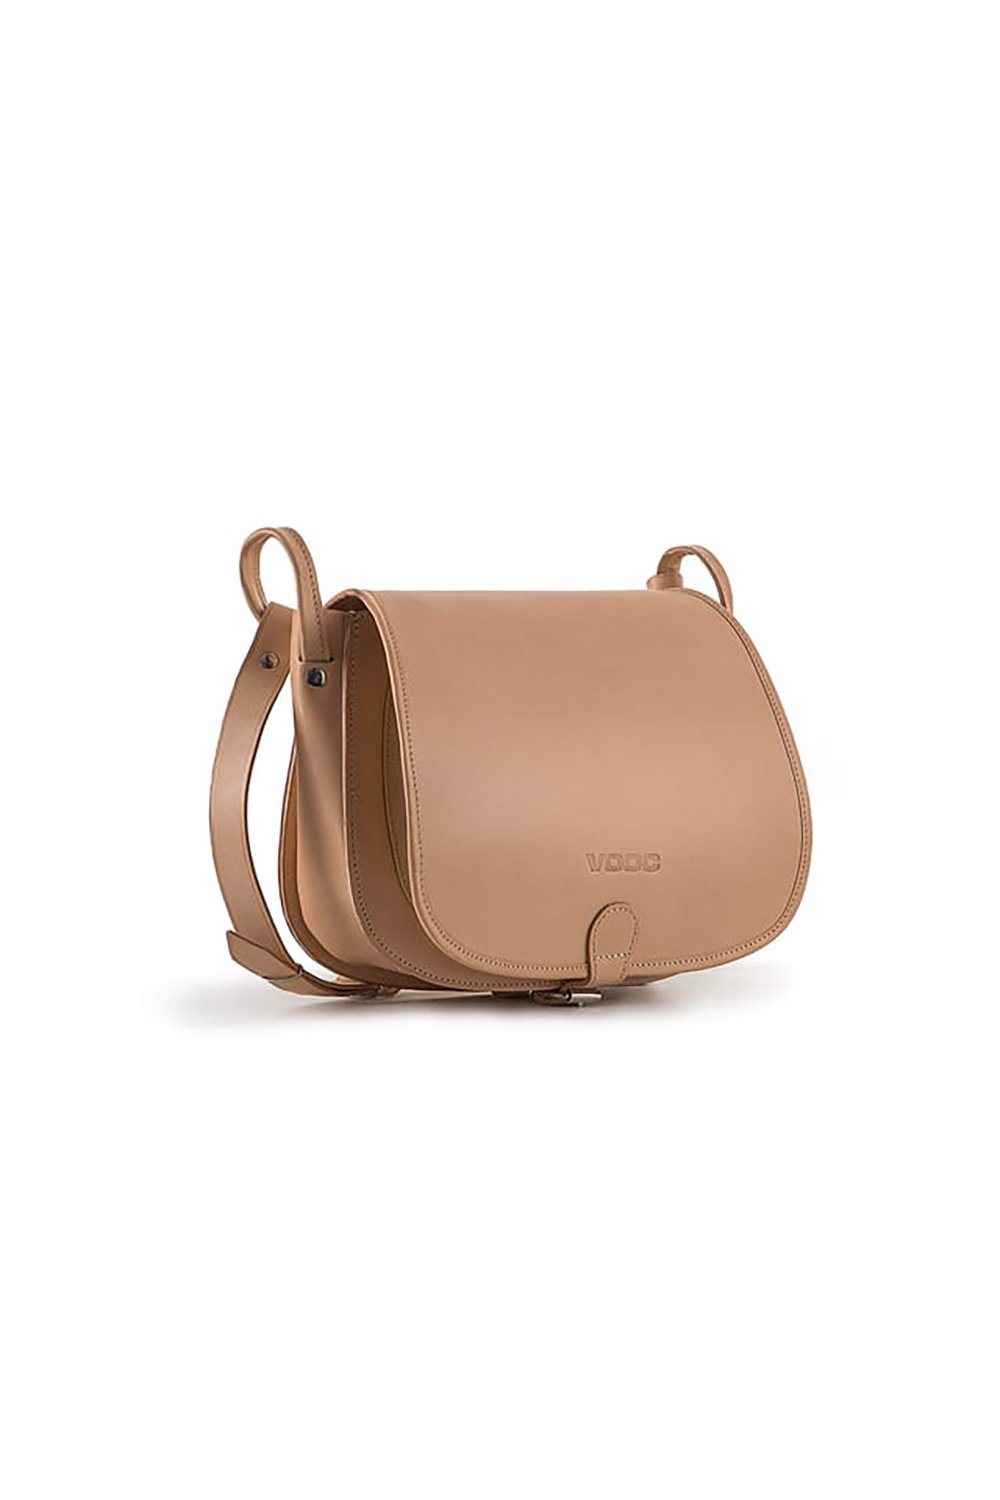 Natural leather bag model 152157 Verosoft Posh Styles Apparel